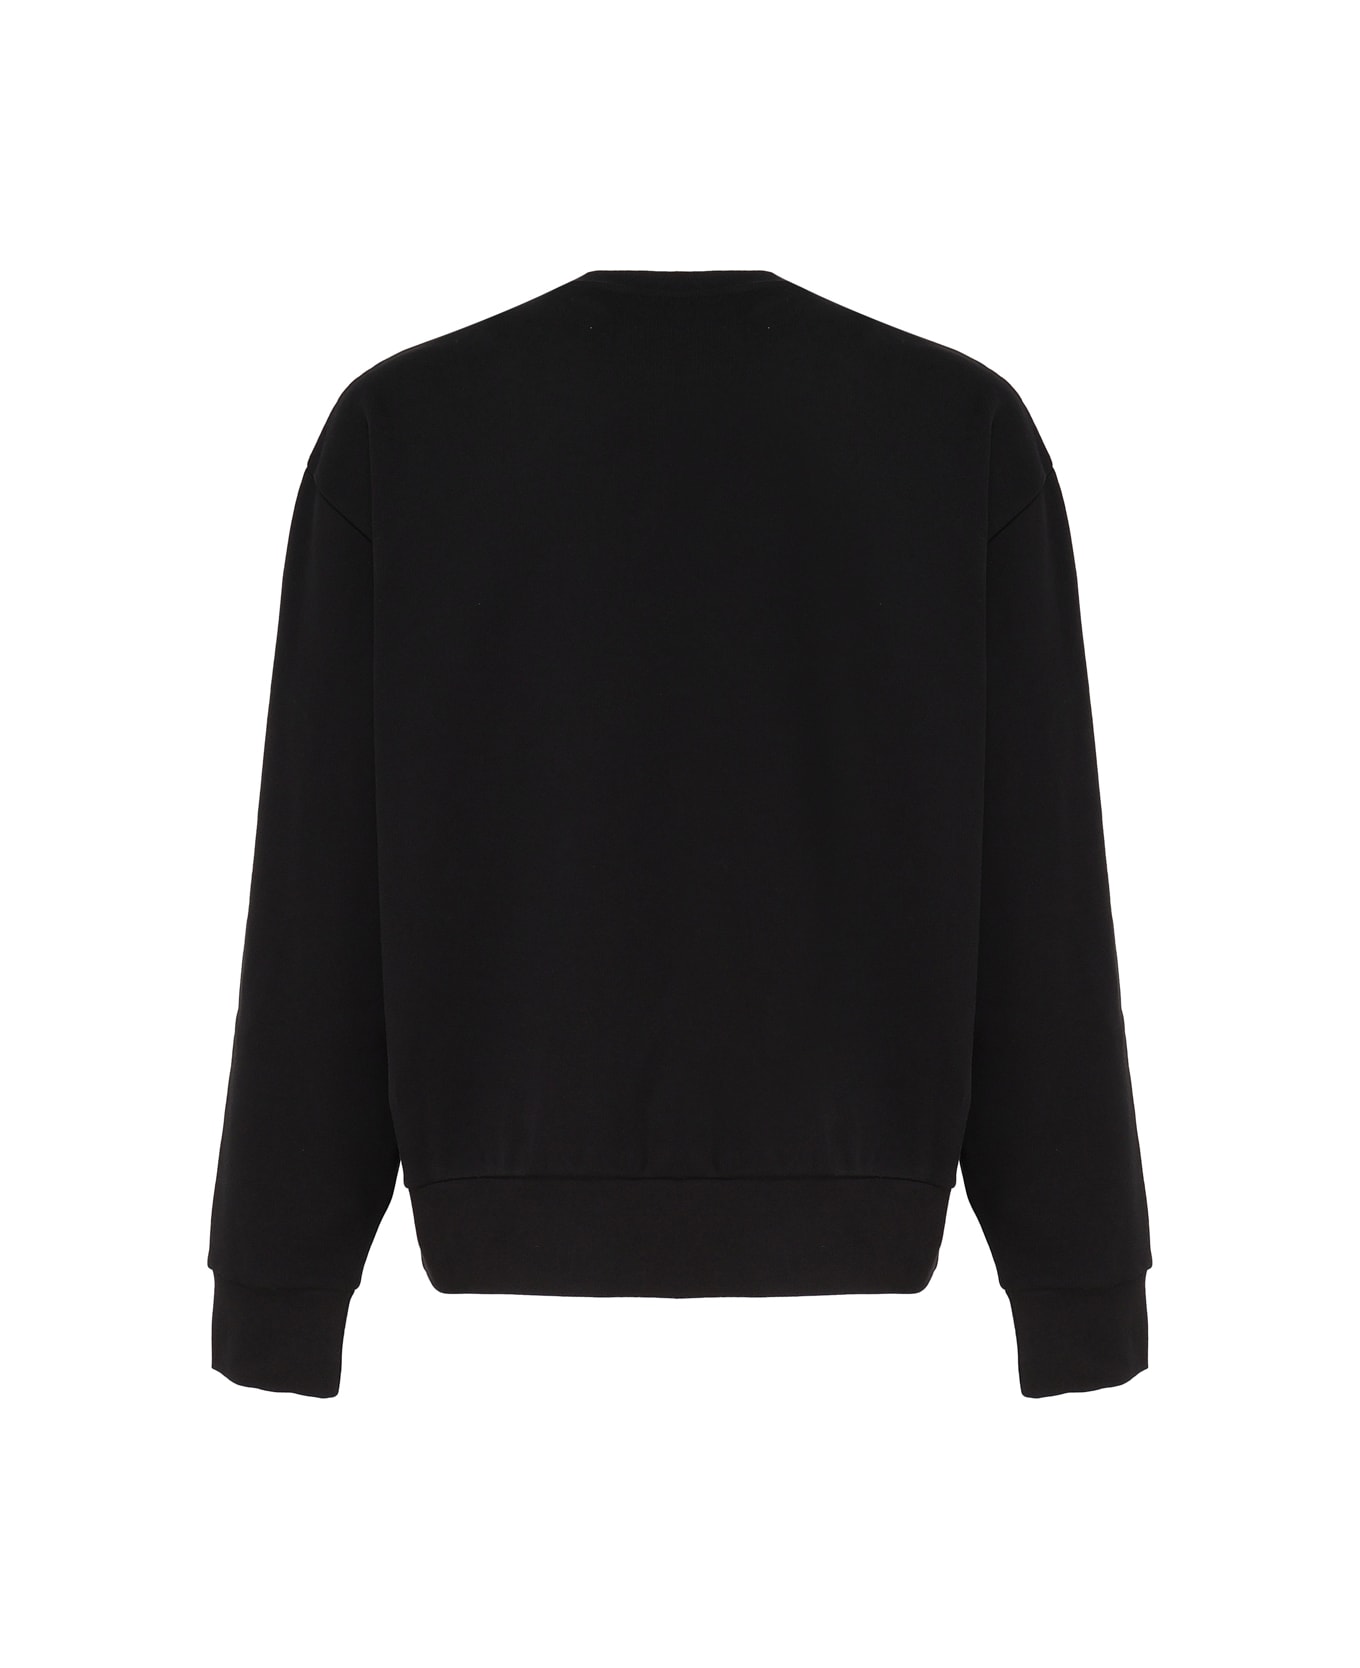 Moncler Genius Logoed Sweatshirt - Black フリース